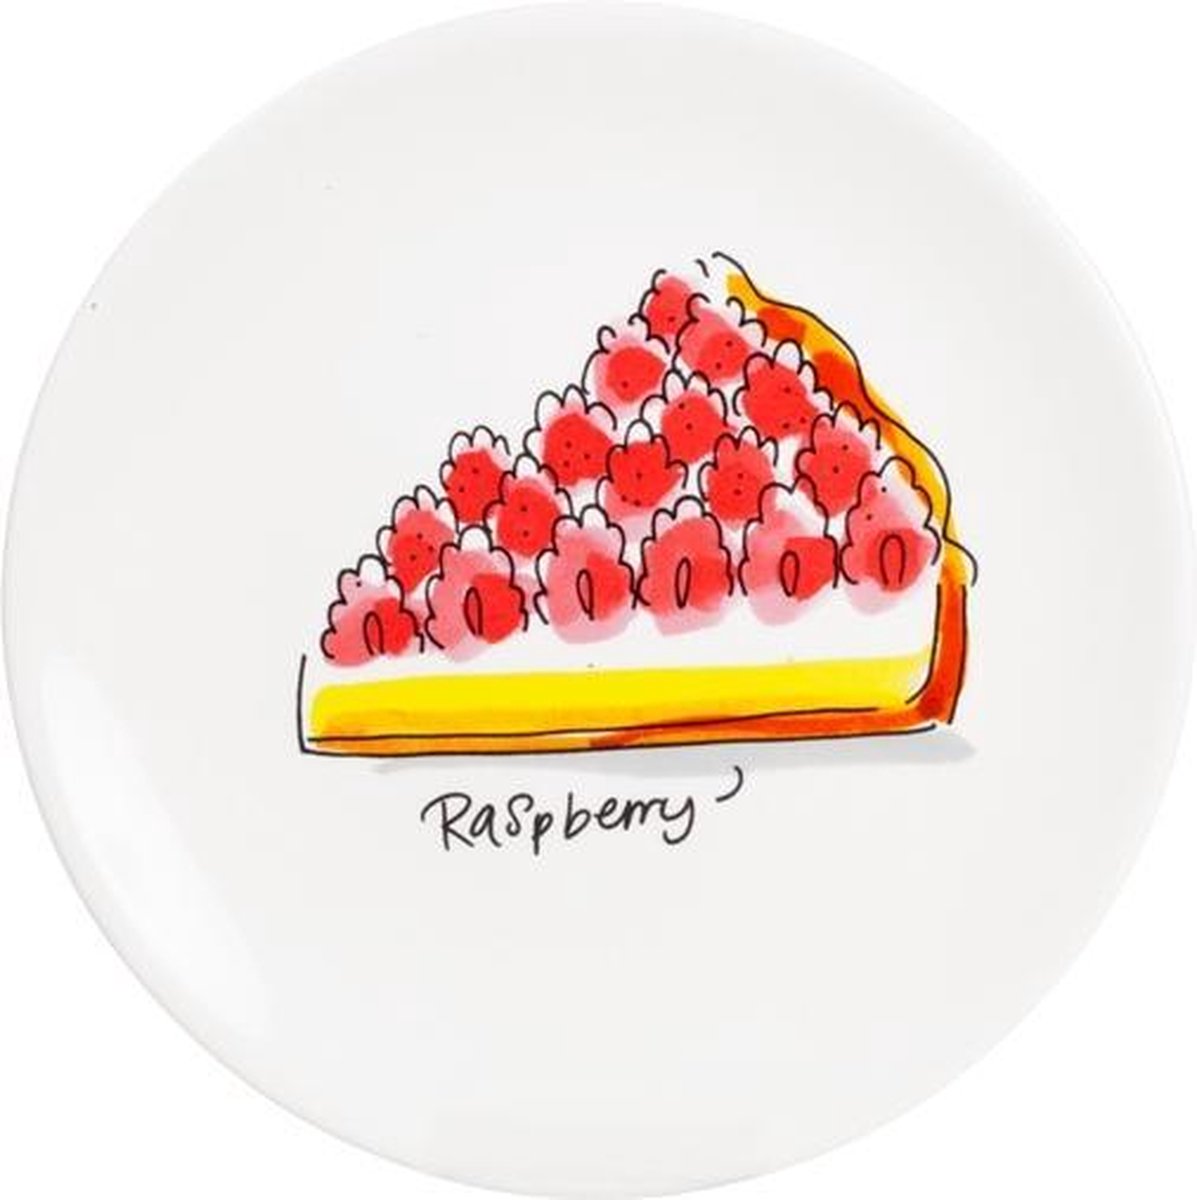 Blond Amsterdam – Even Bijkletsen - Cake Plate Raspberry -18 Cm - Blond Amsterdam